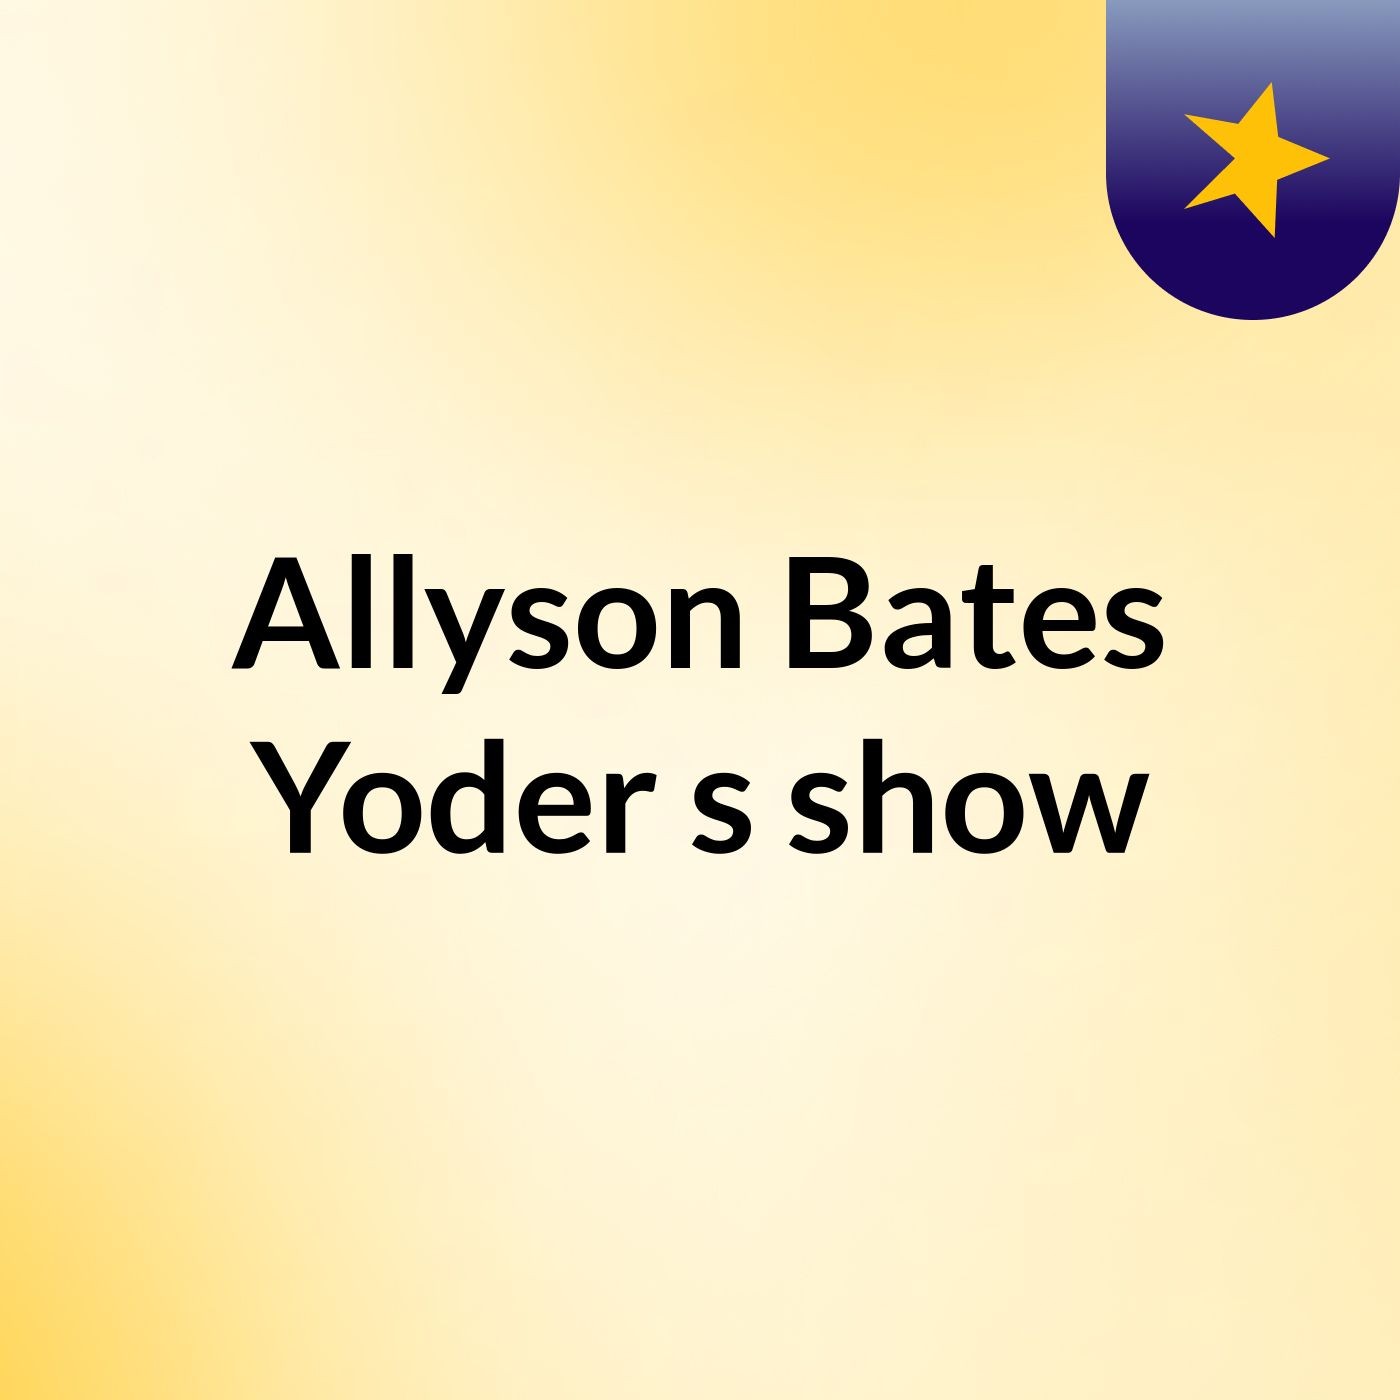 Allyson Bates Yoder's show